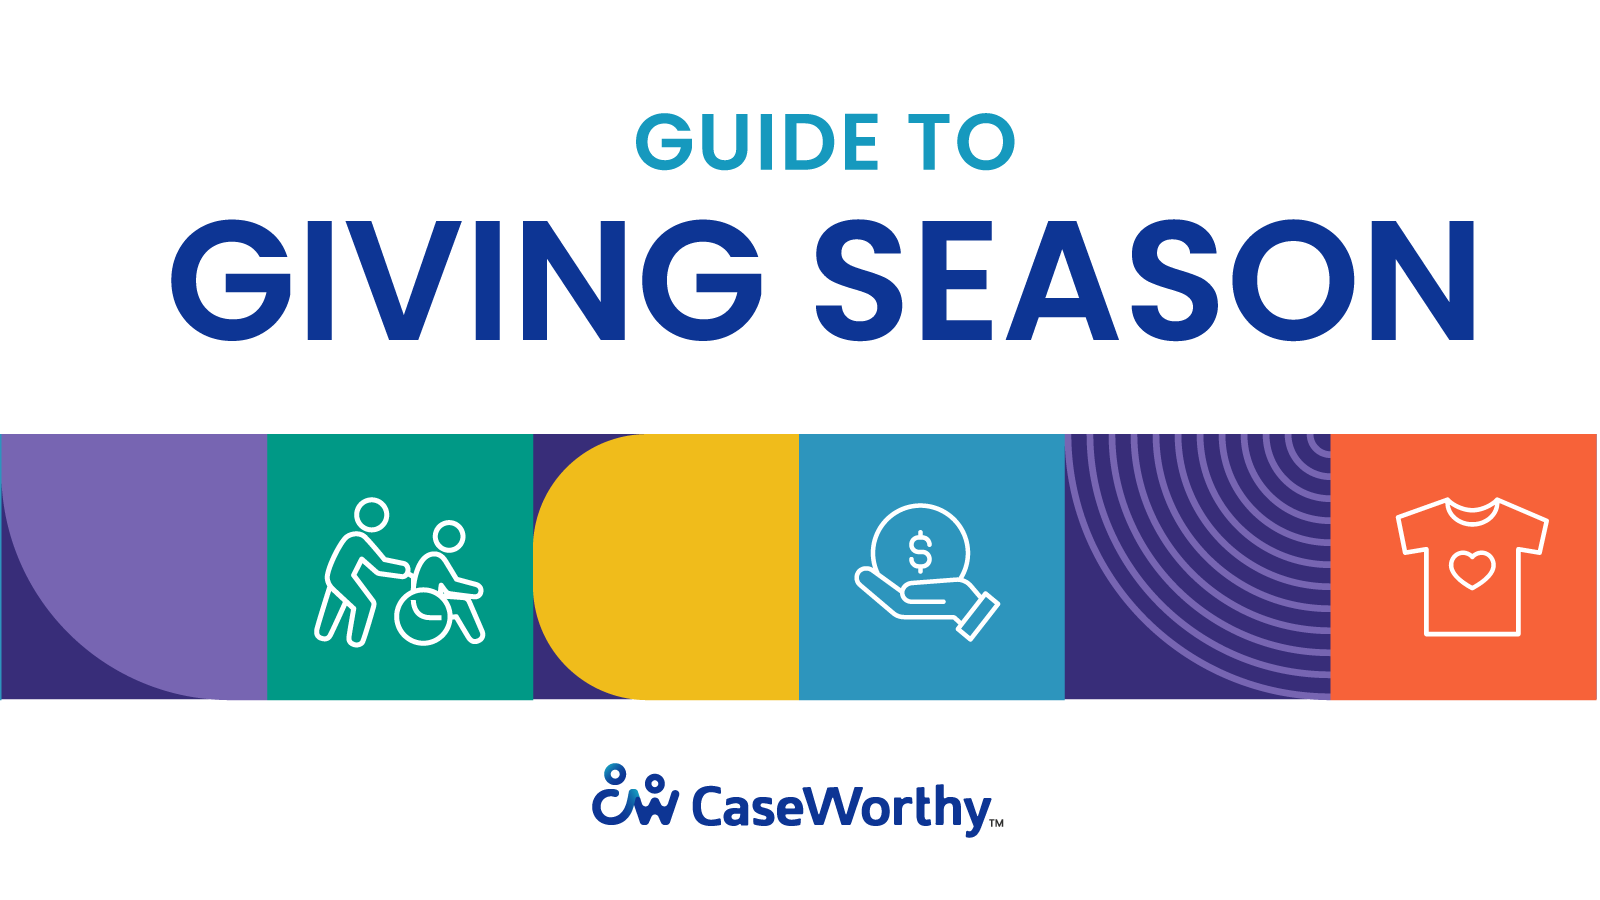 Guide to Giving Season